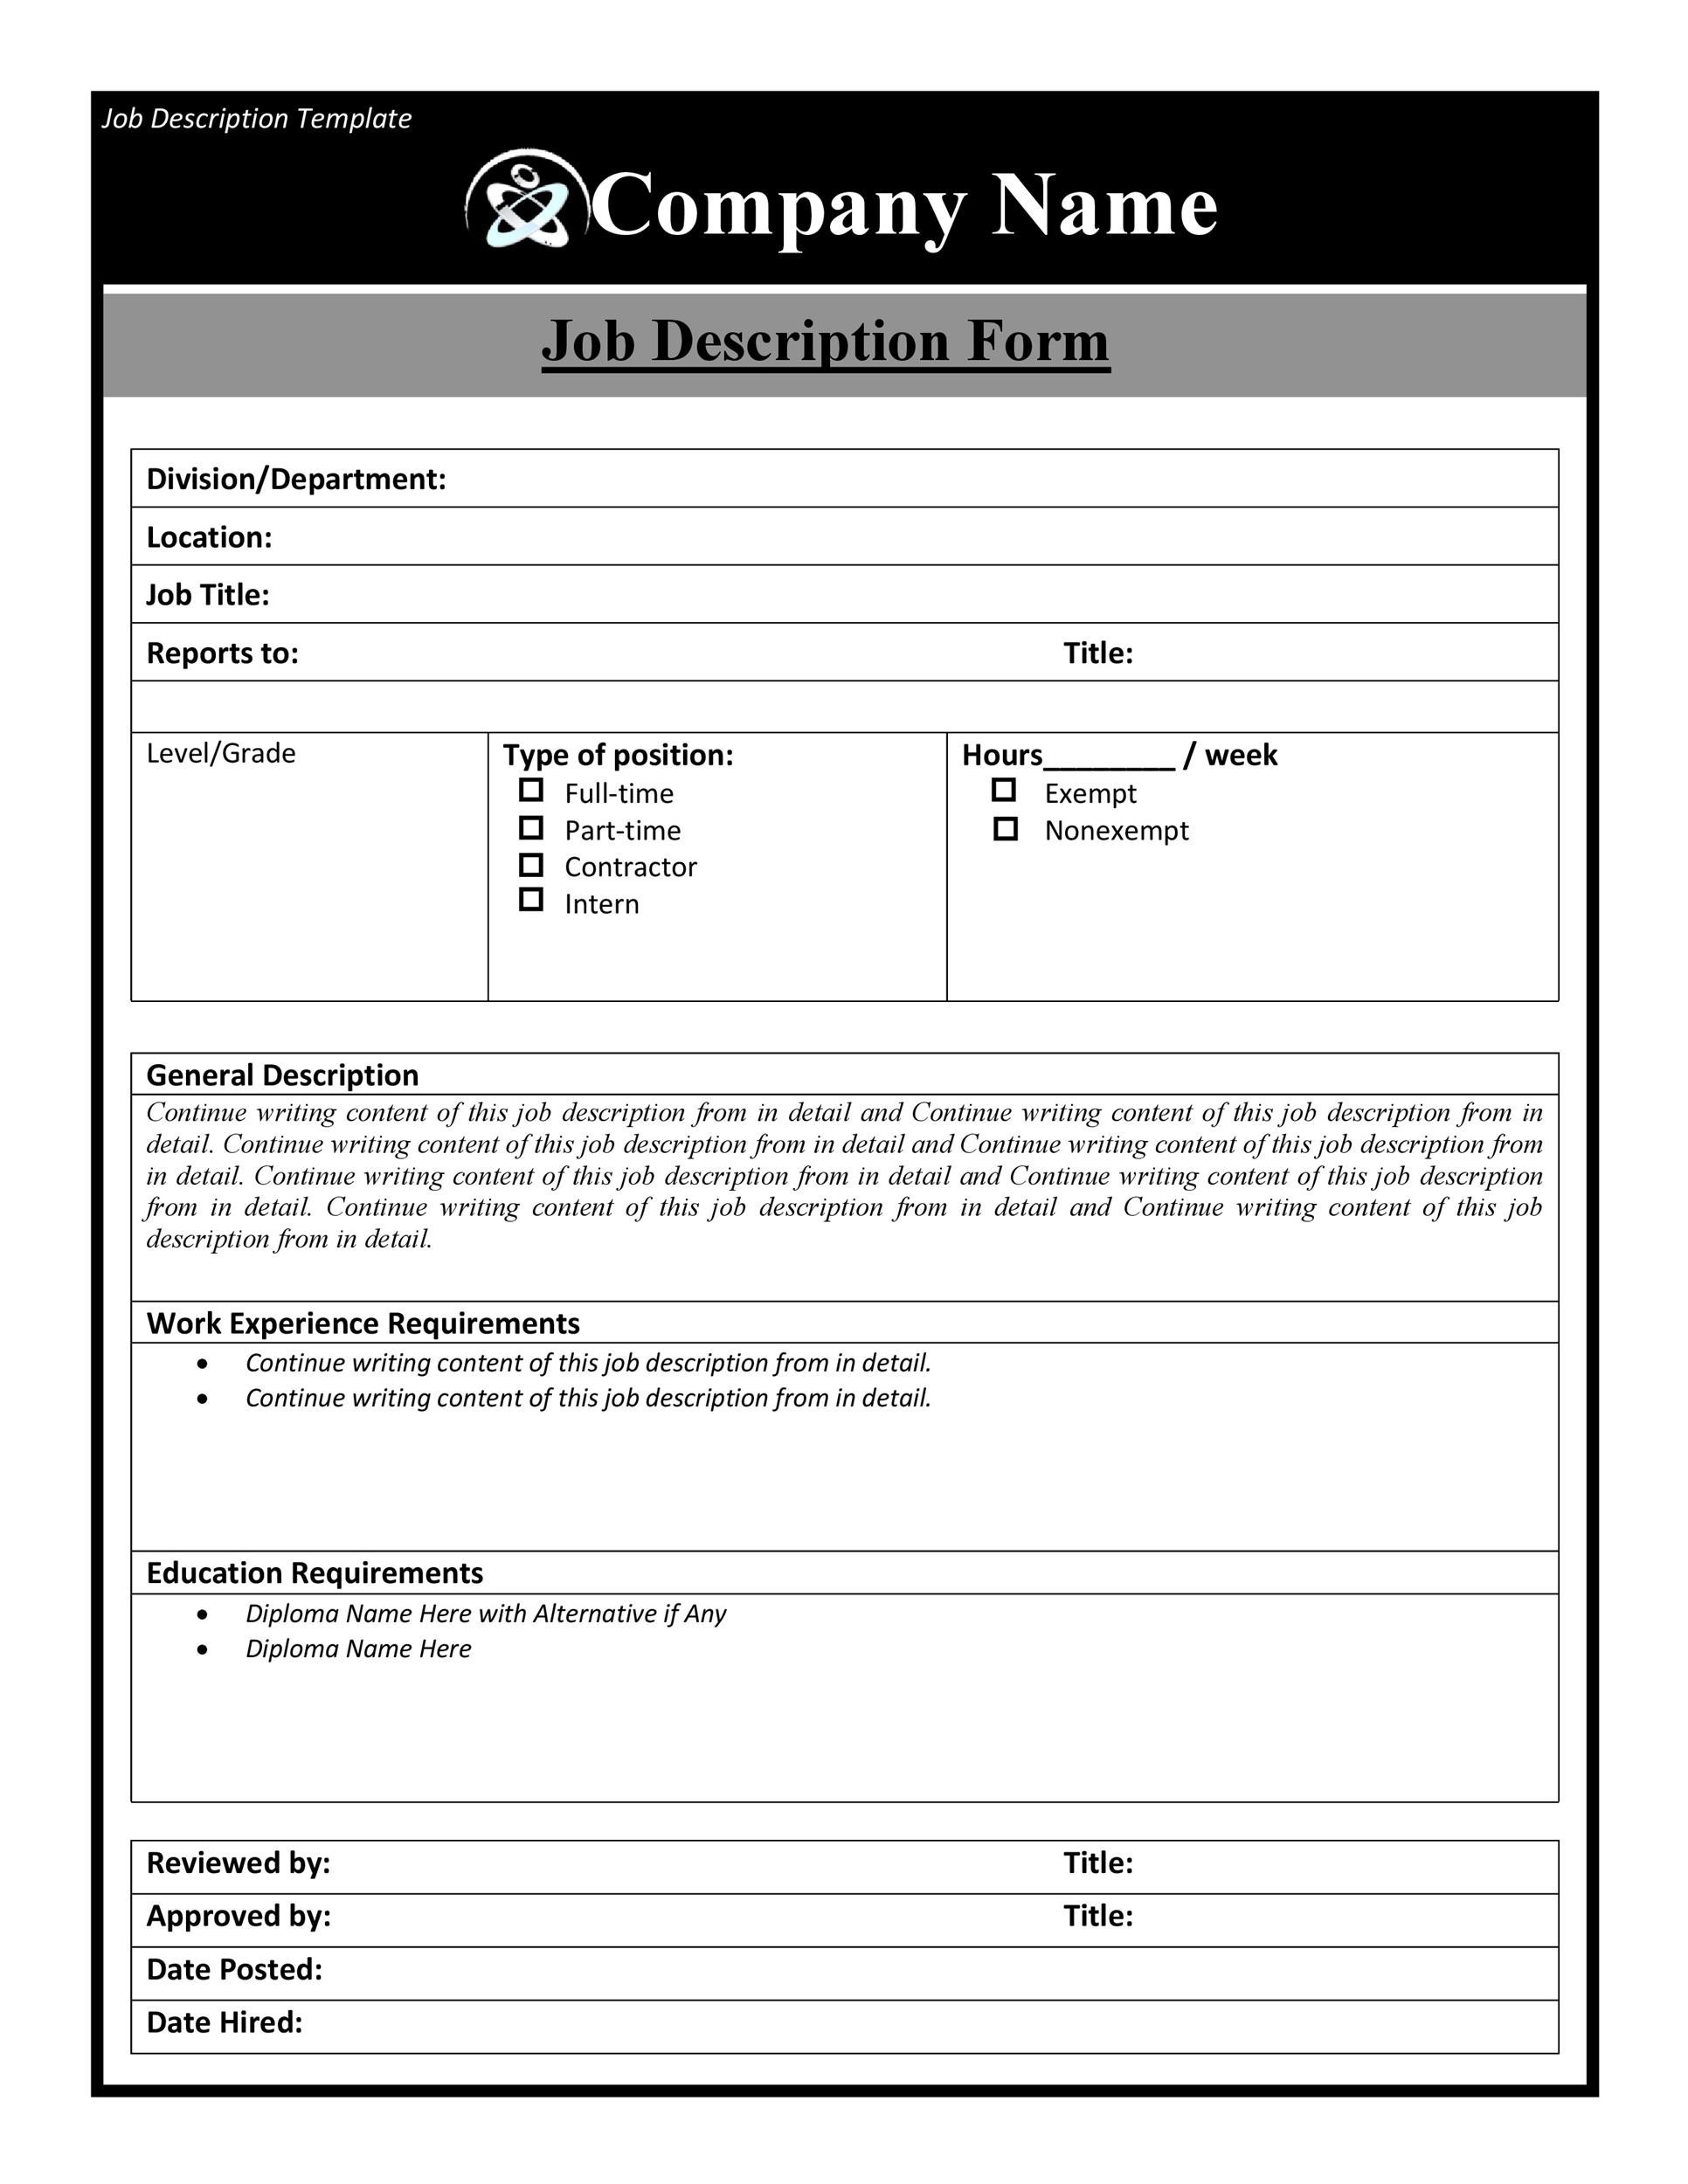 Free Job Description Template 17